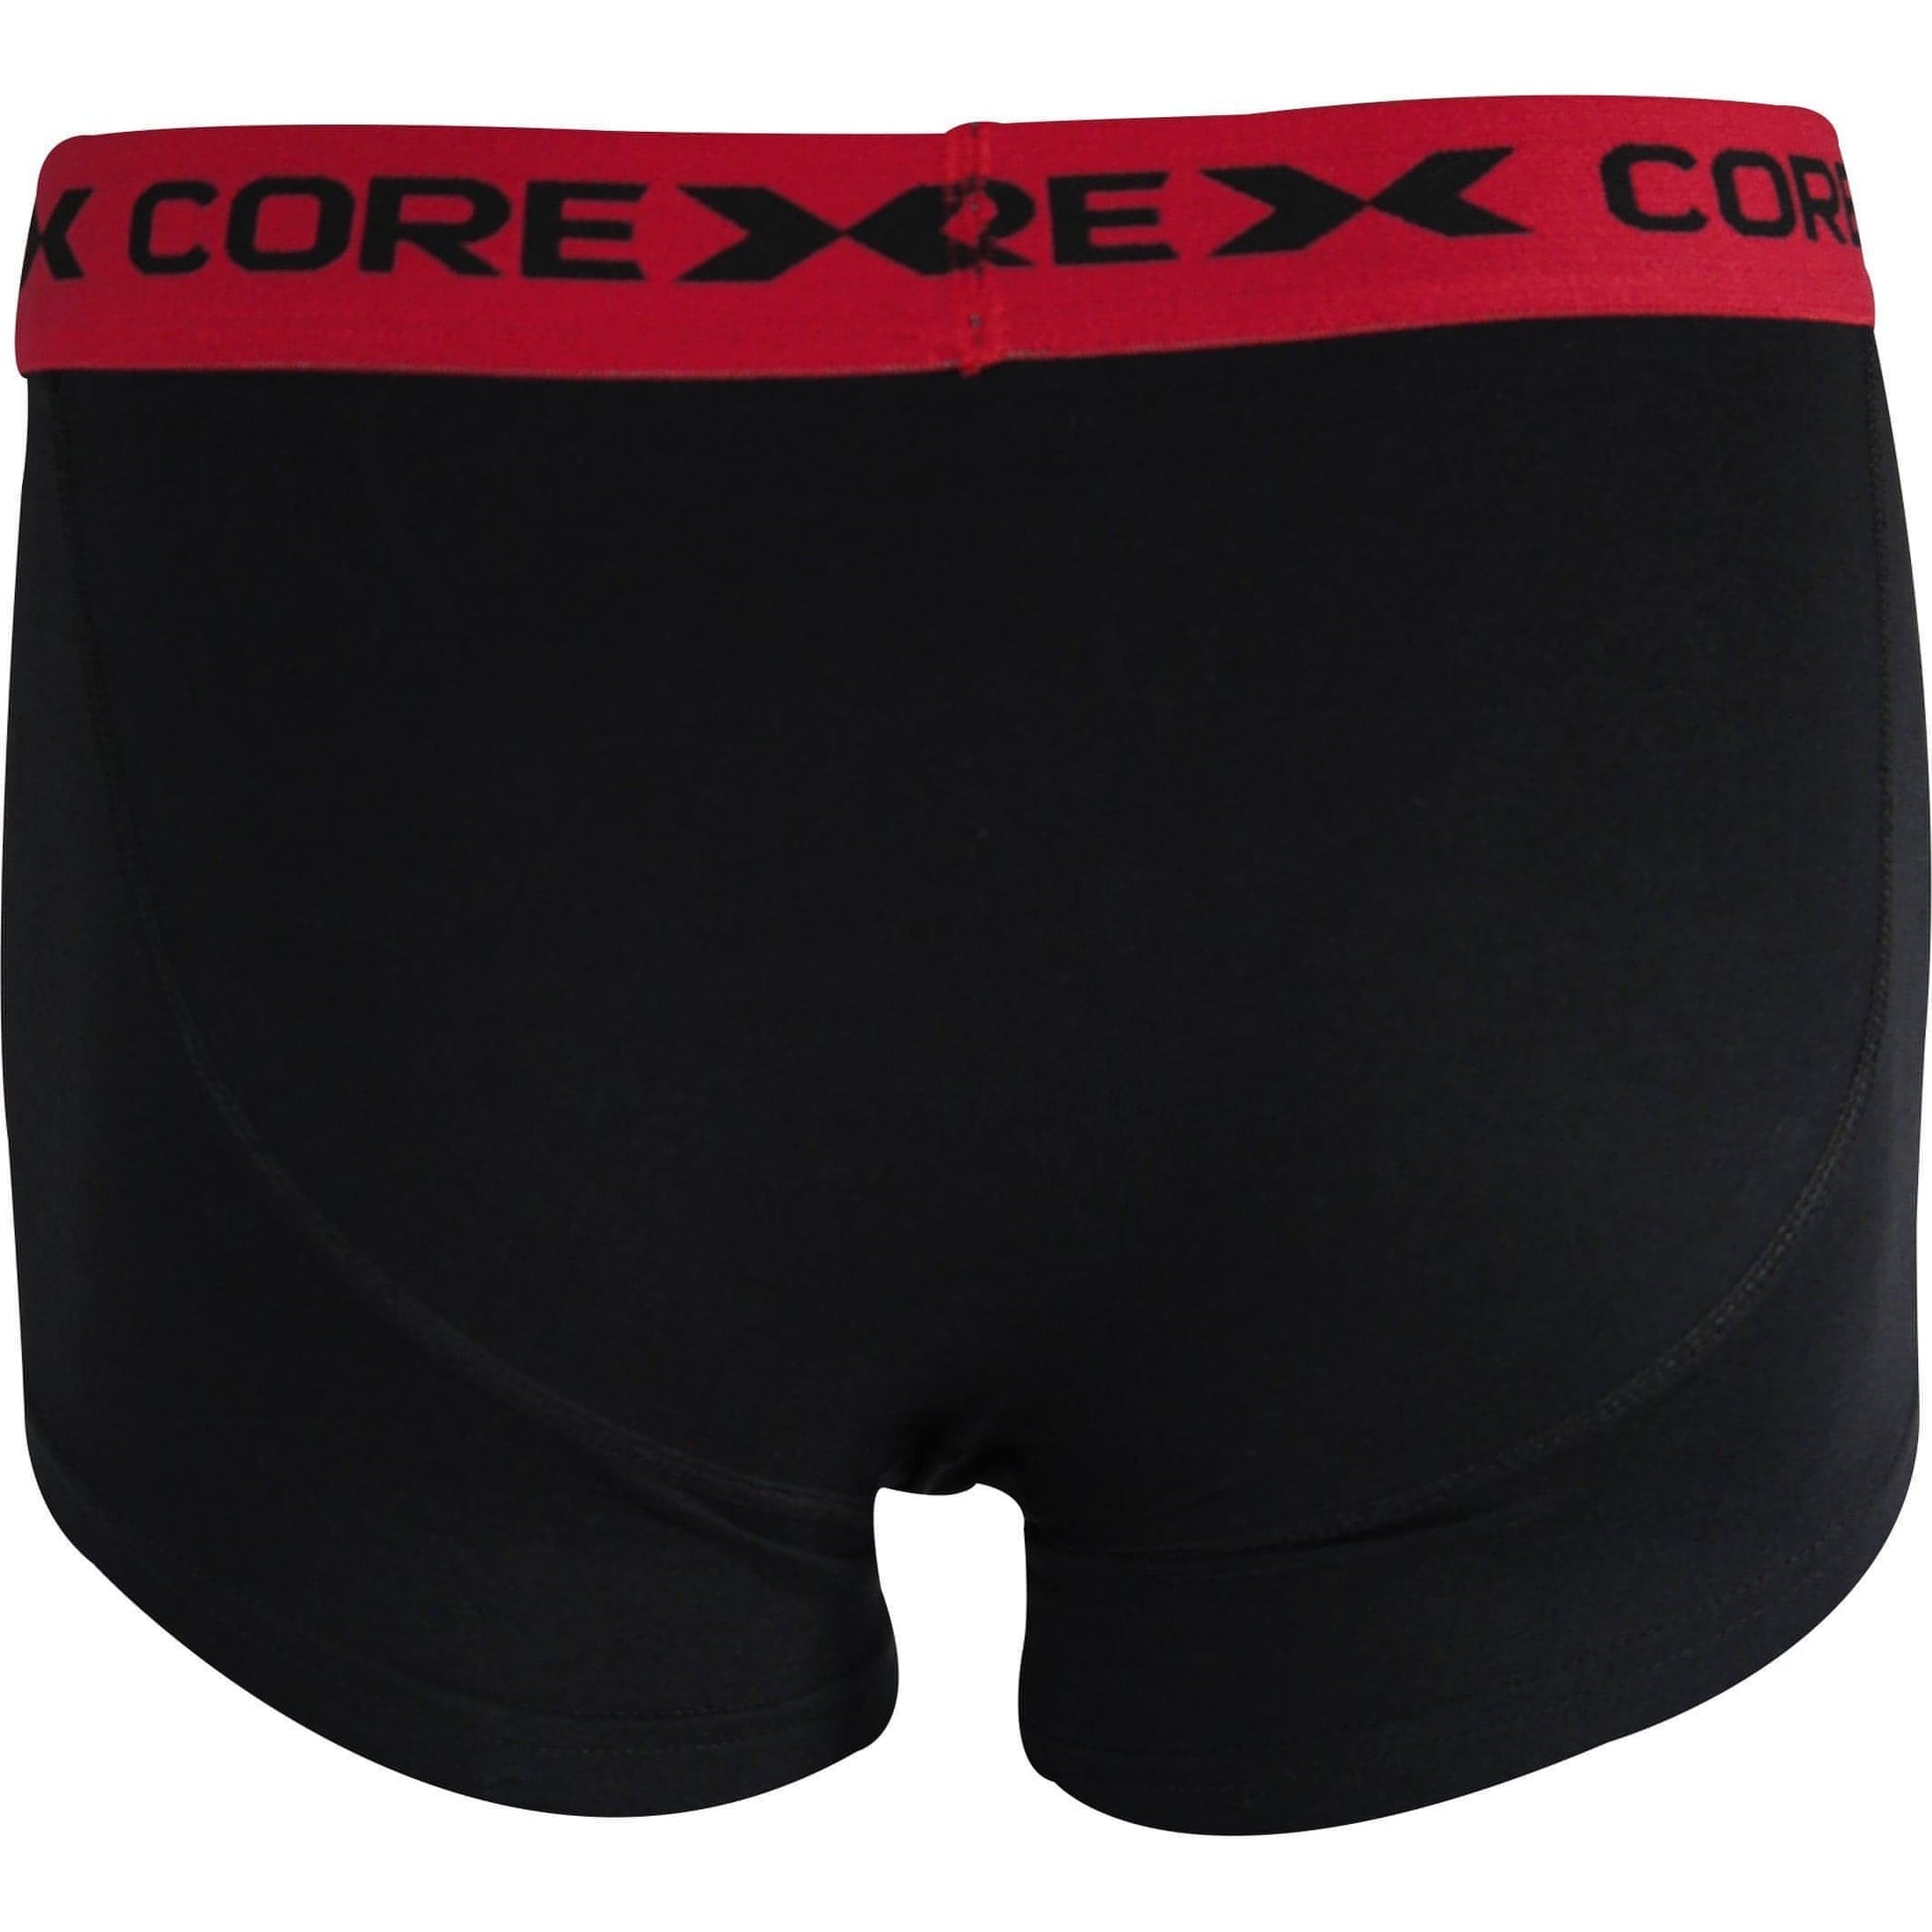 Corex Fitness Classic Pack Boxers 1P204911Wm Blackred Black Back View